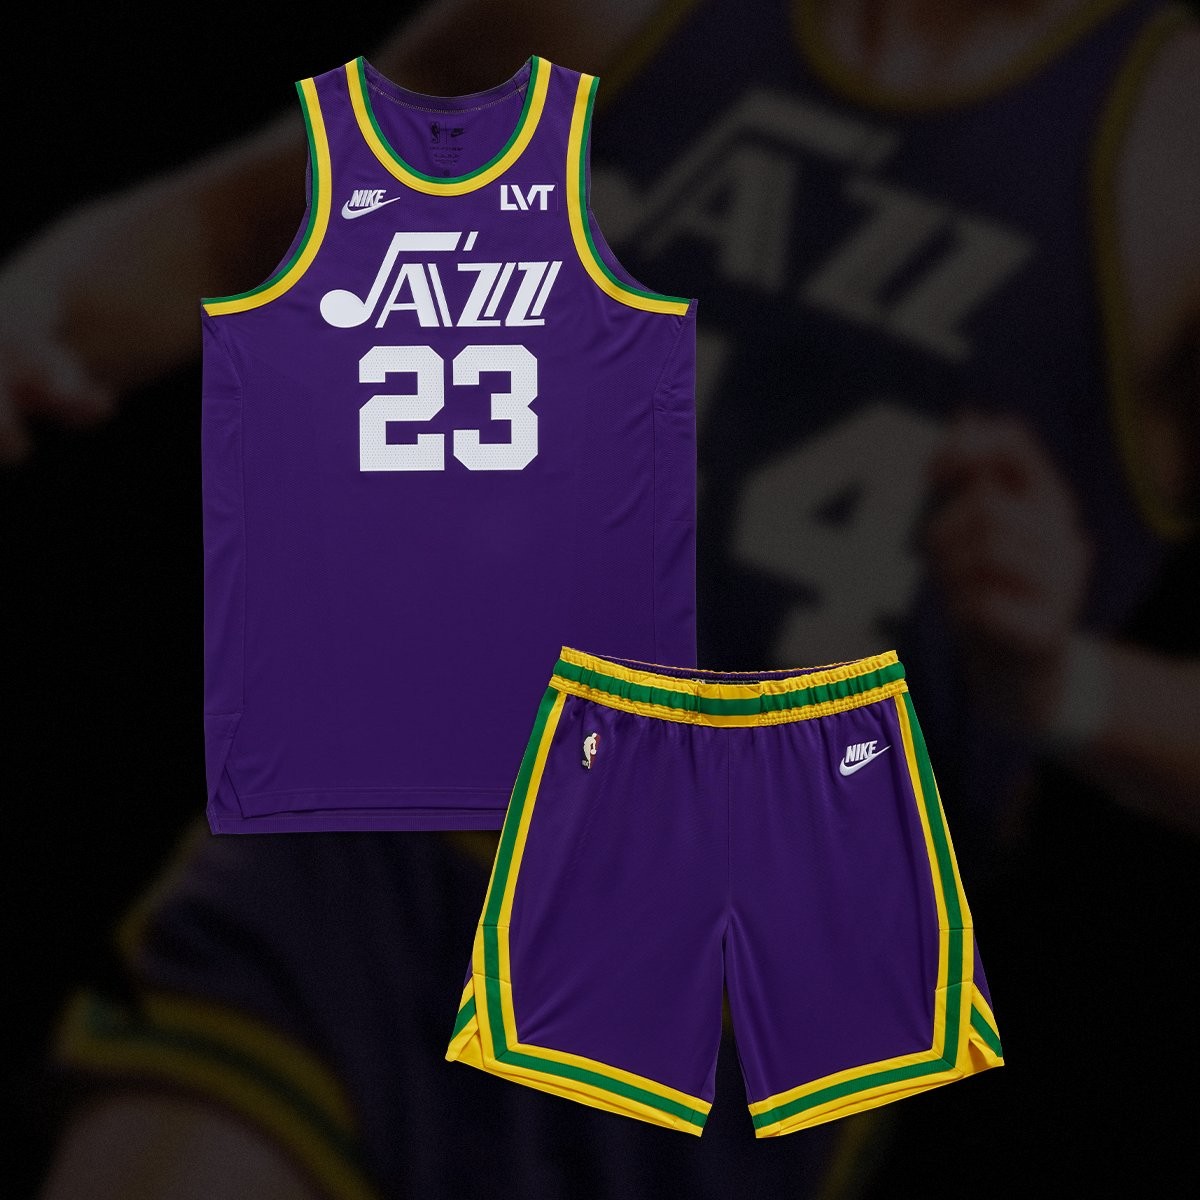 jazz leaked jersey